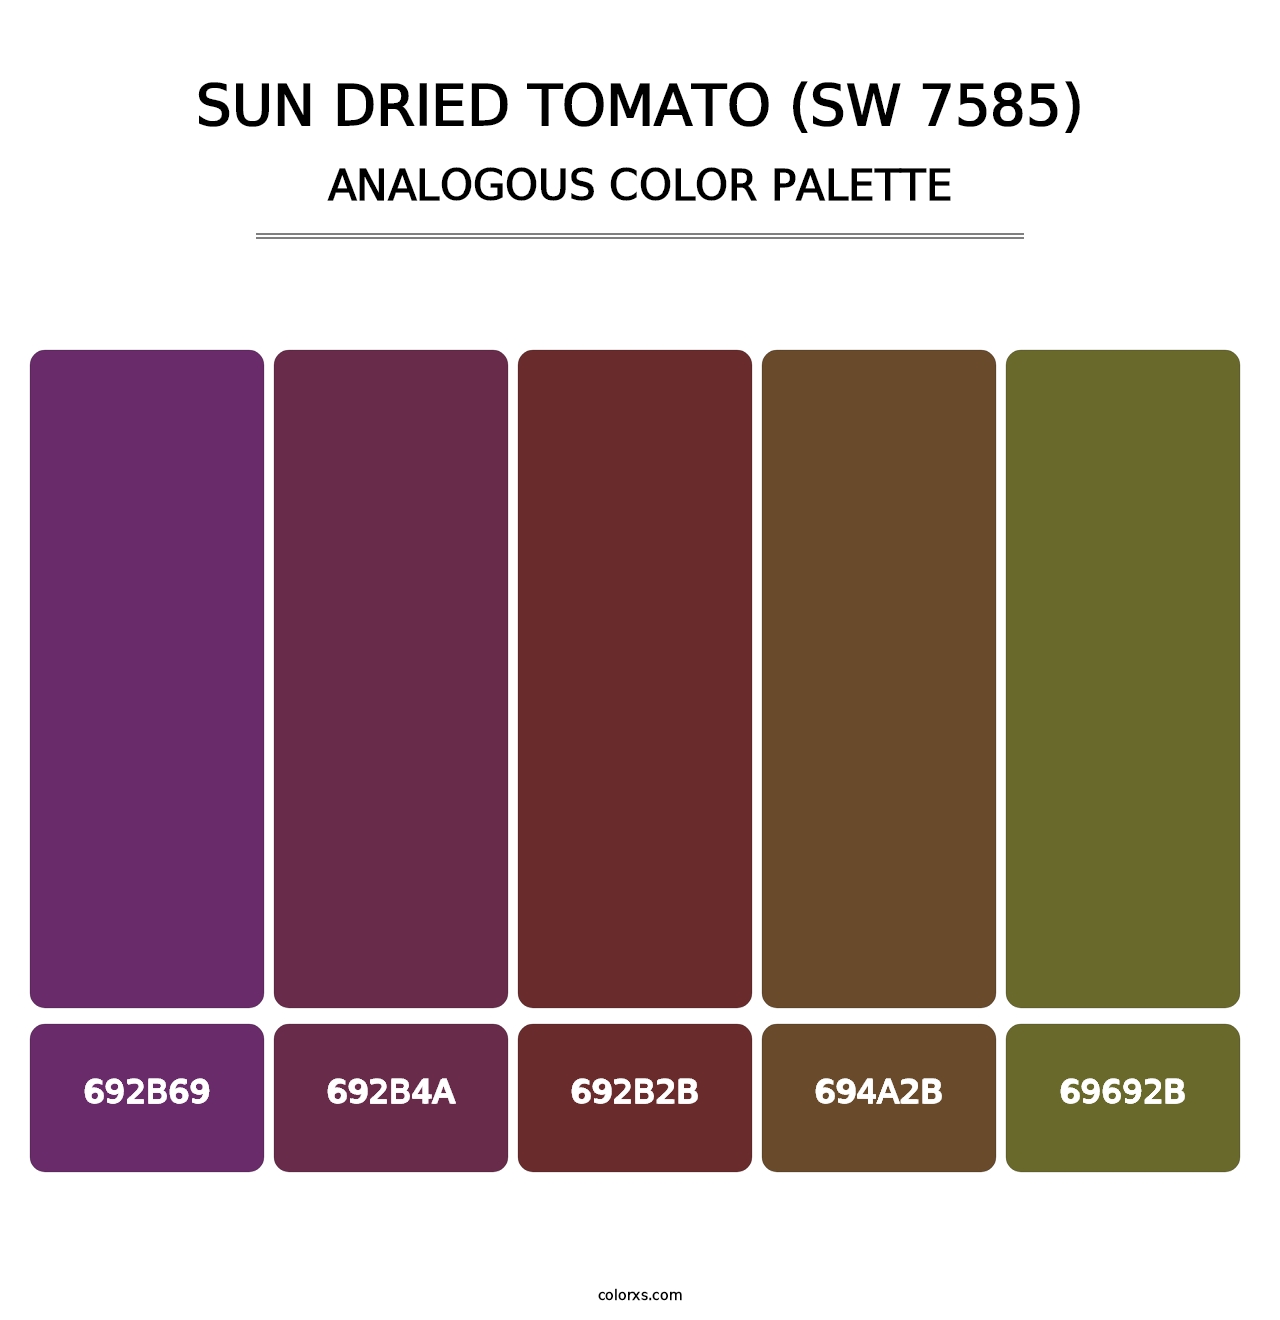 Sun Dried Tomato (SW 7585) - Analogous Color Palette